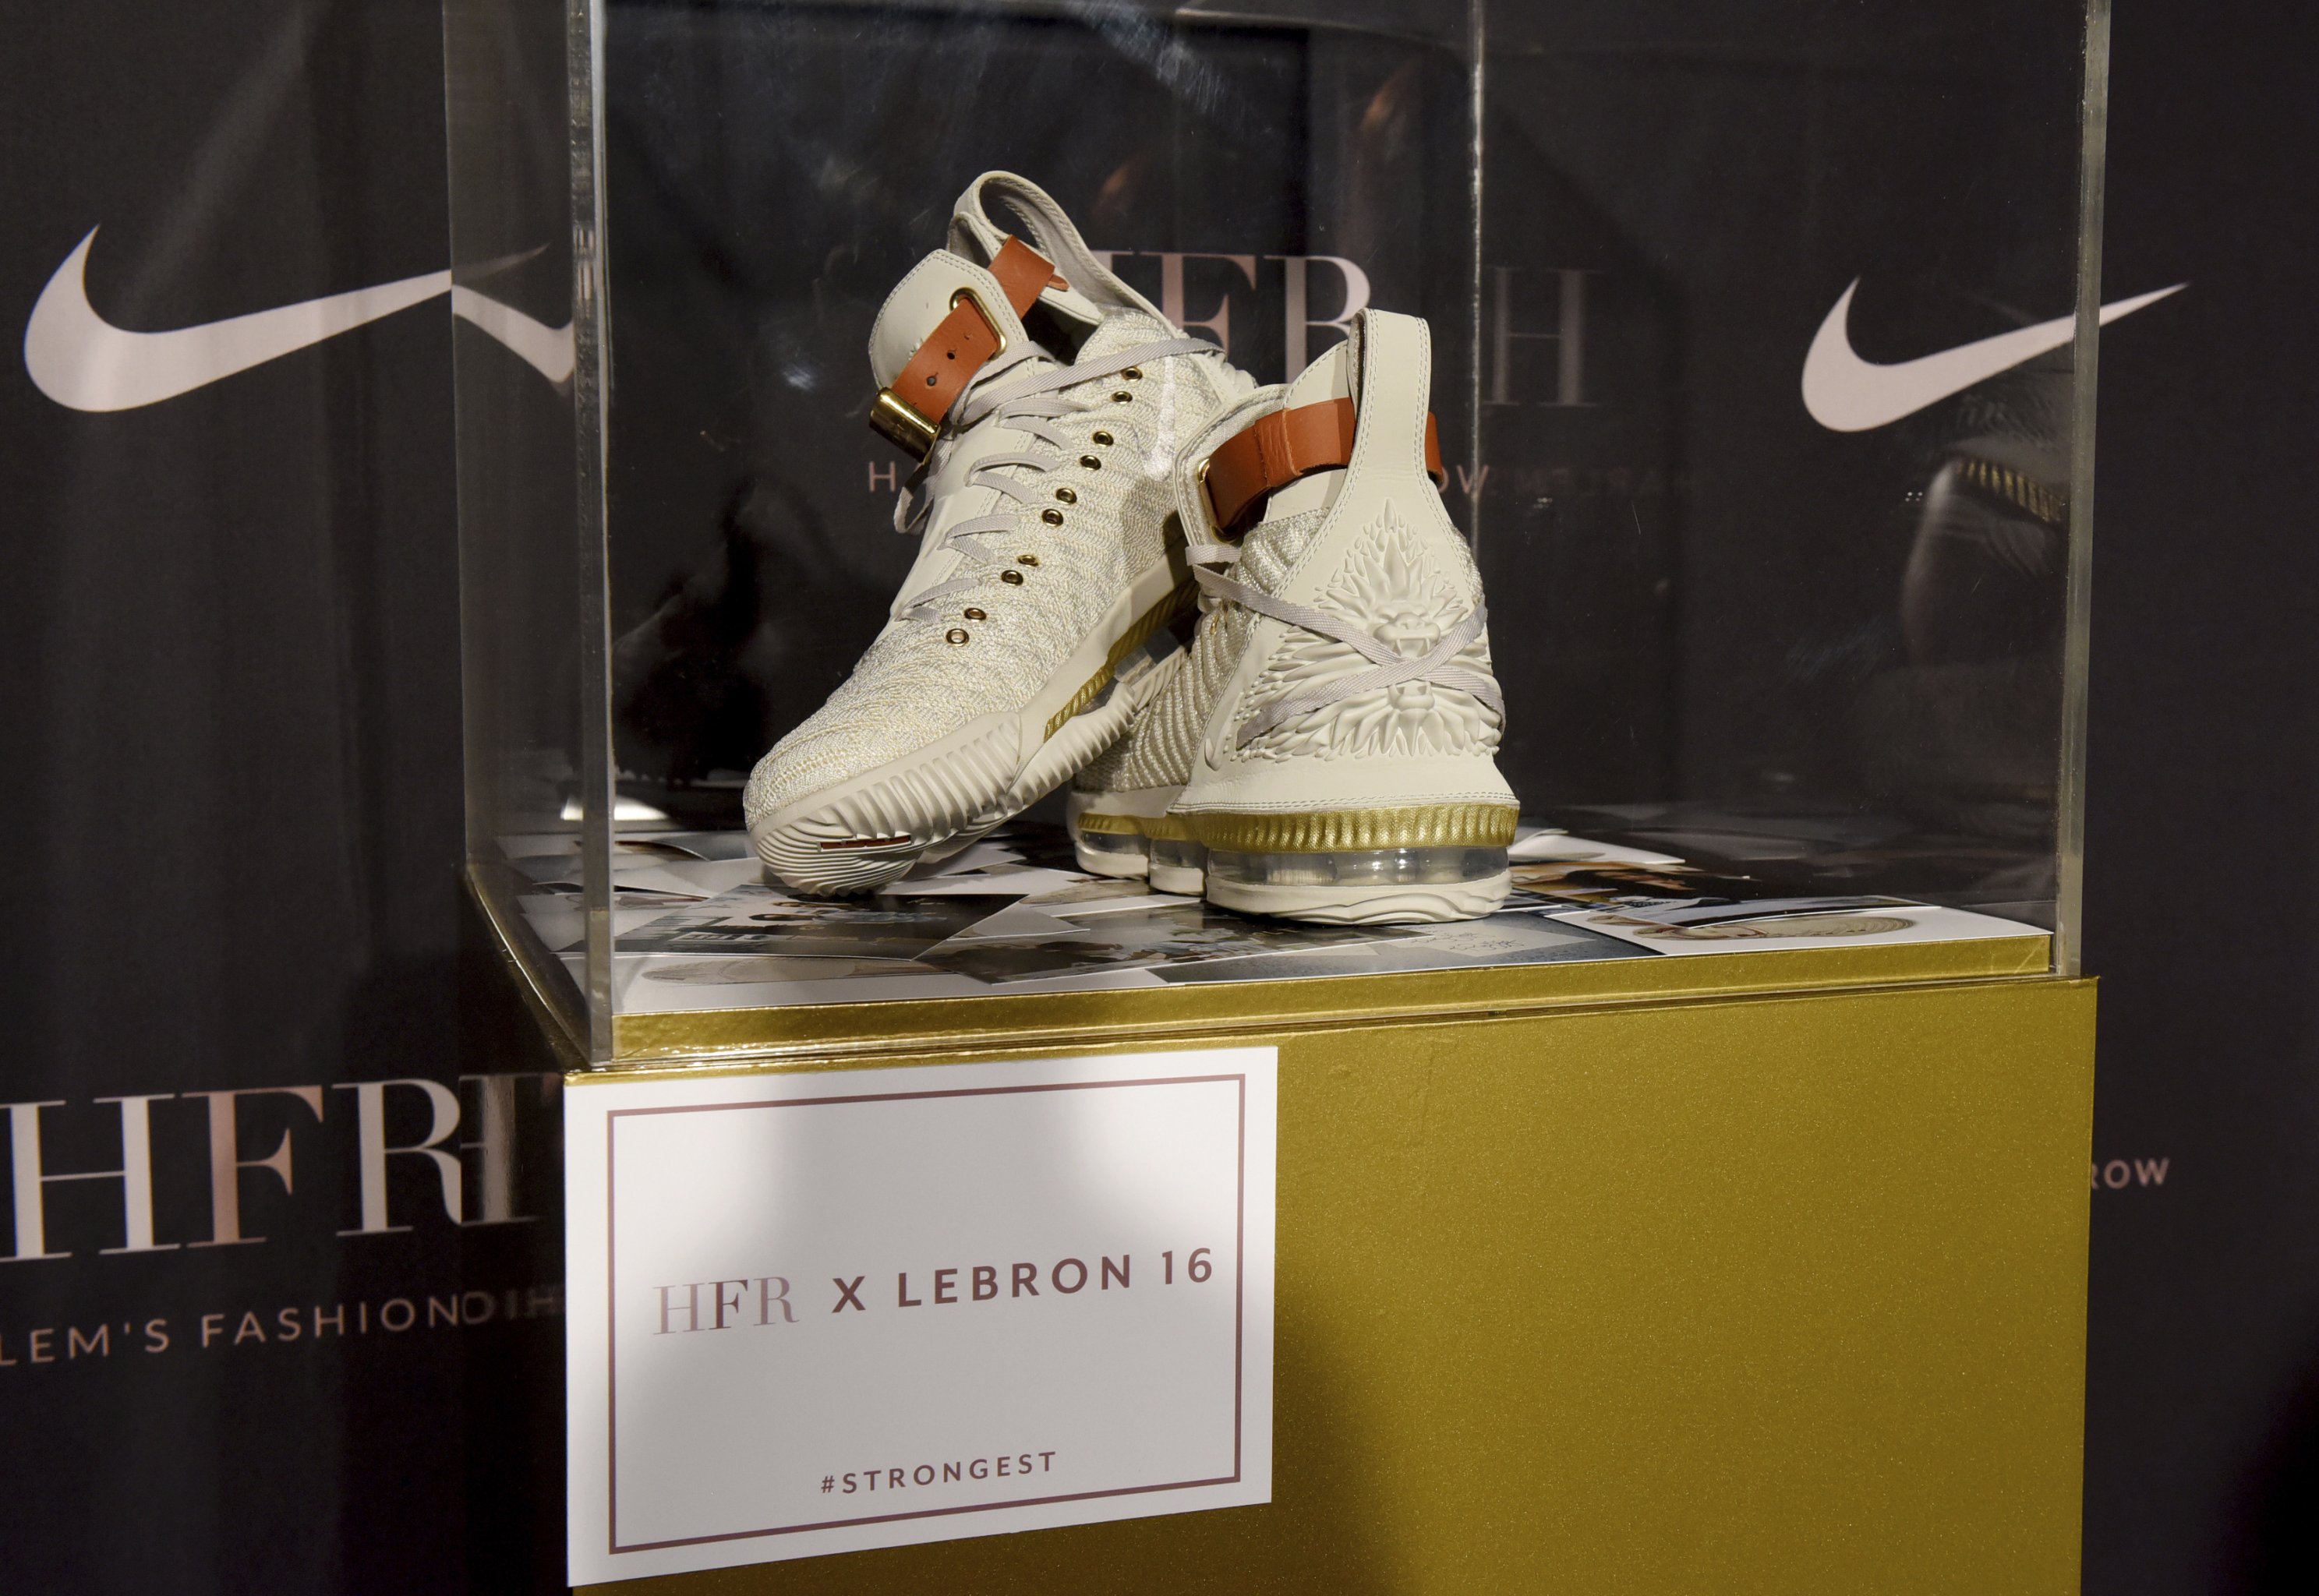 The New Nike LeBron 16 XVI HFR Sneaker Makes an Important